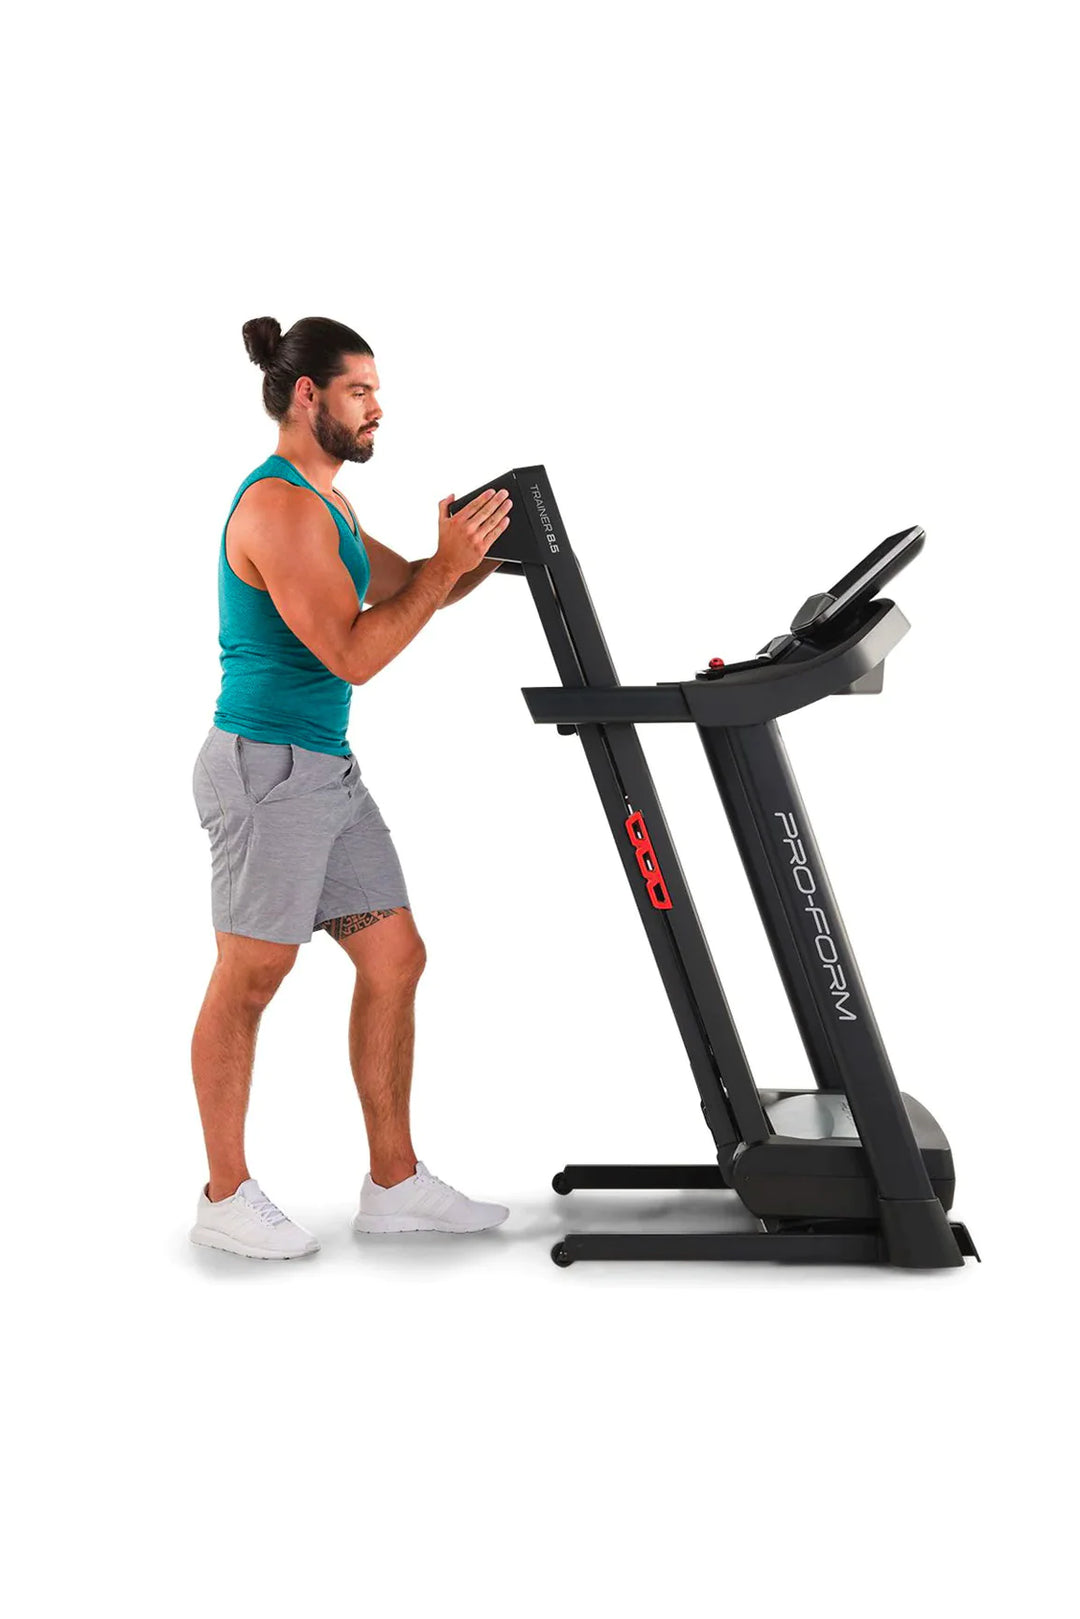 Next Fitness Home Gym NFHG-10350 + Pro Form Cardio